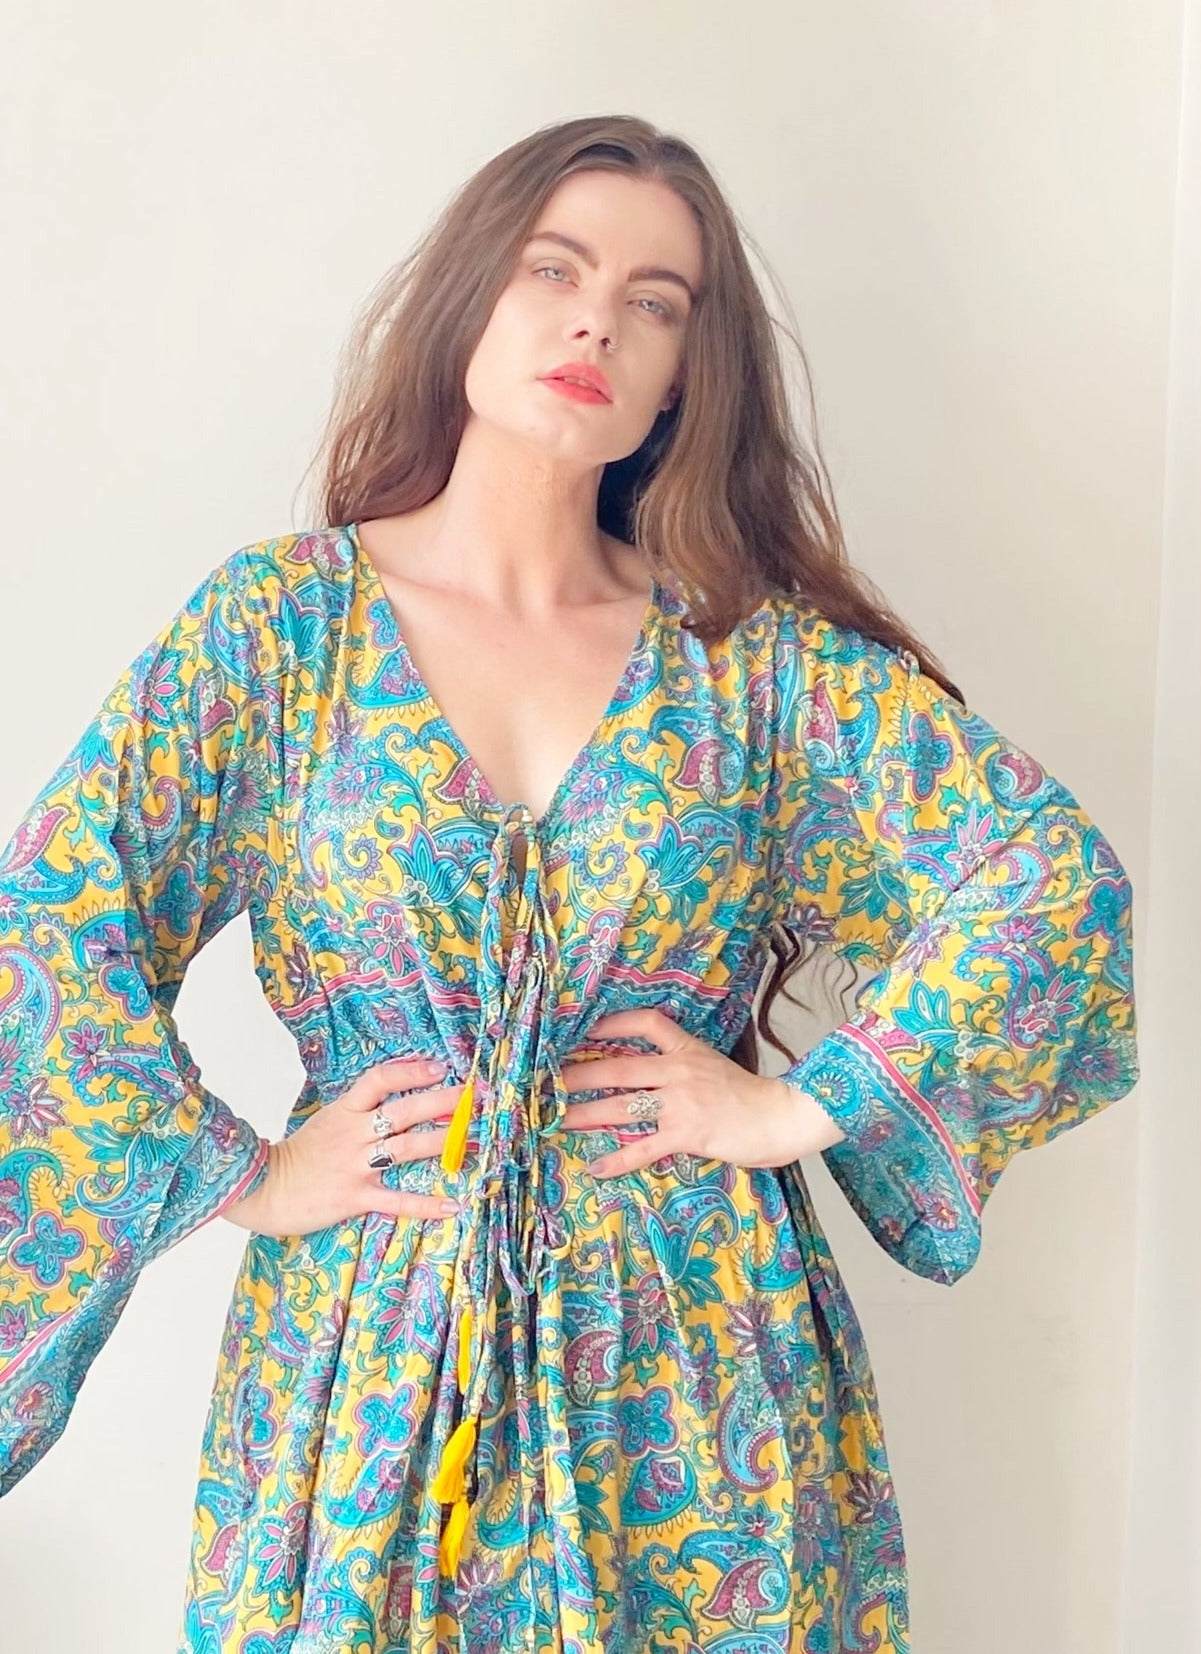 Nova yellow turquoise floral print silk maxi dress free size UK8-16DRESSES